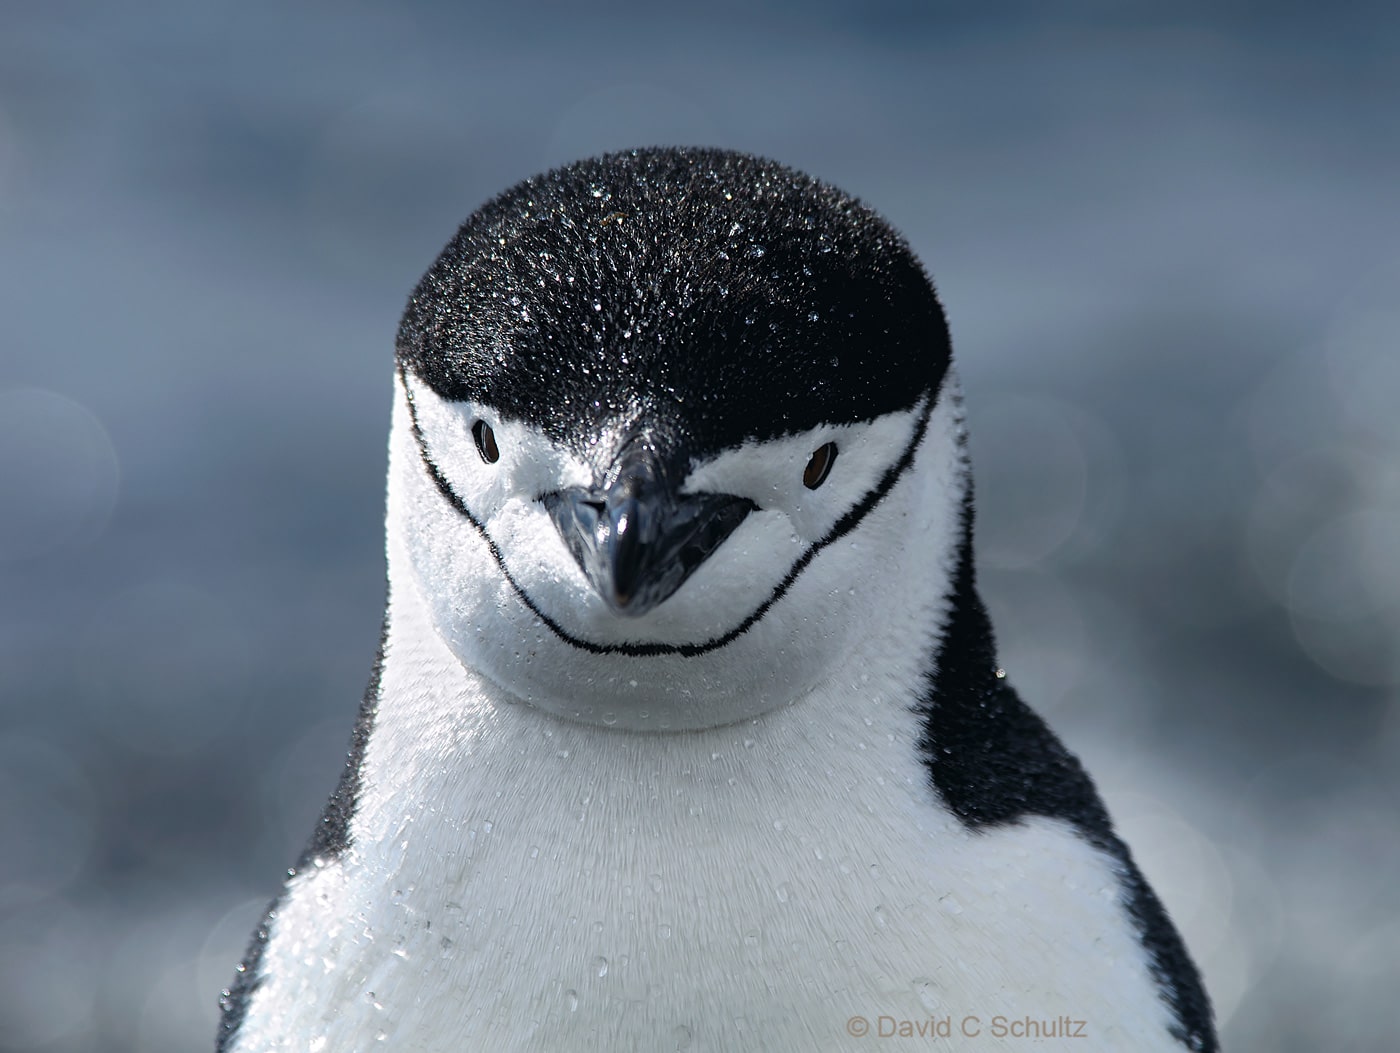 Chinstrap penguin in Antarctica - Image #163-618